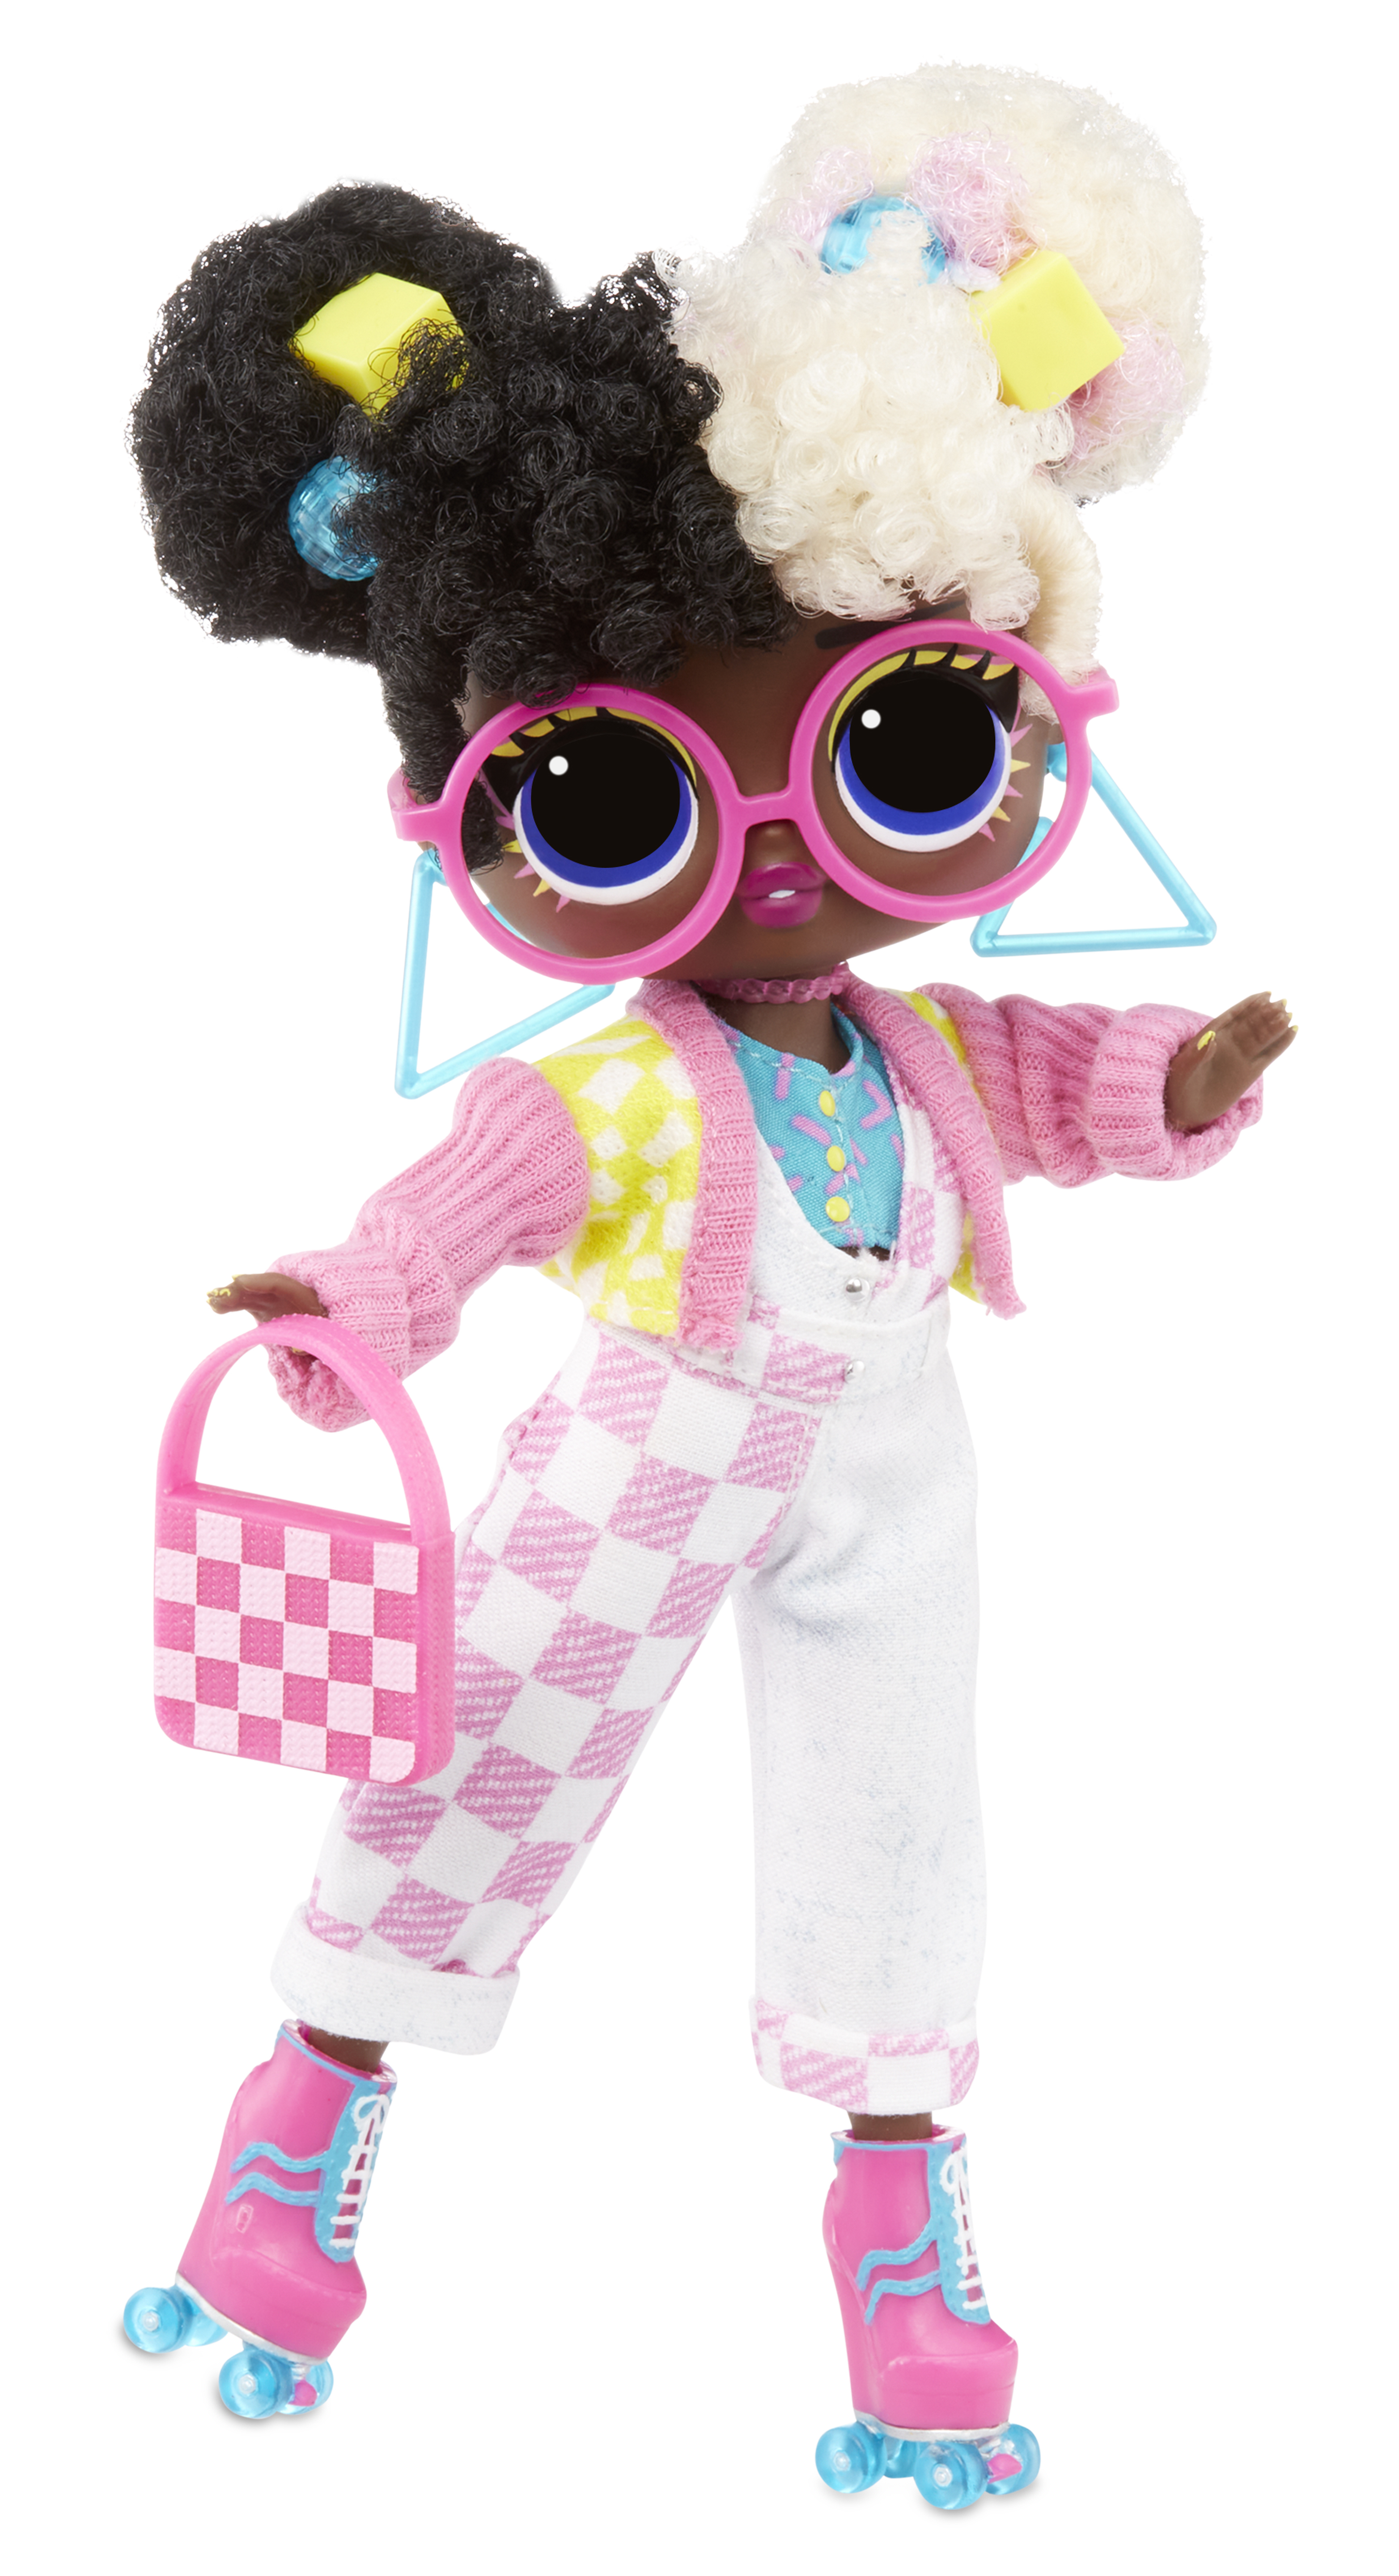 MGA Entertainment Tweens-modepop Gracie Skates van serie 2 met 15 verrassingen inclusief roze outfit en mode-accessoires